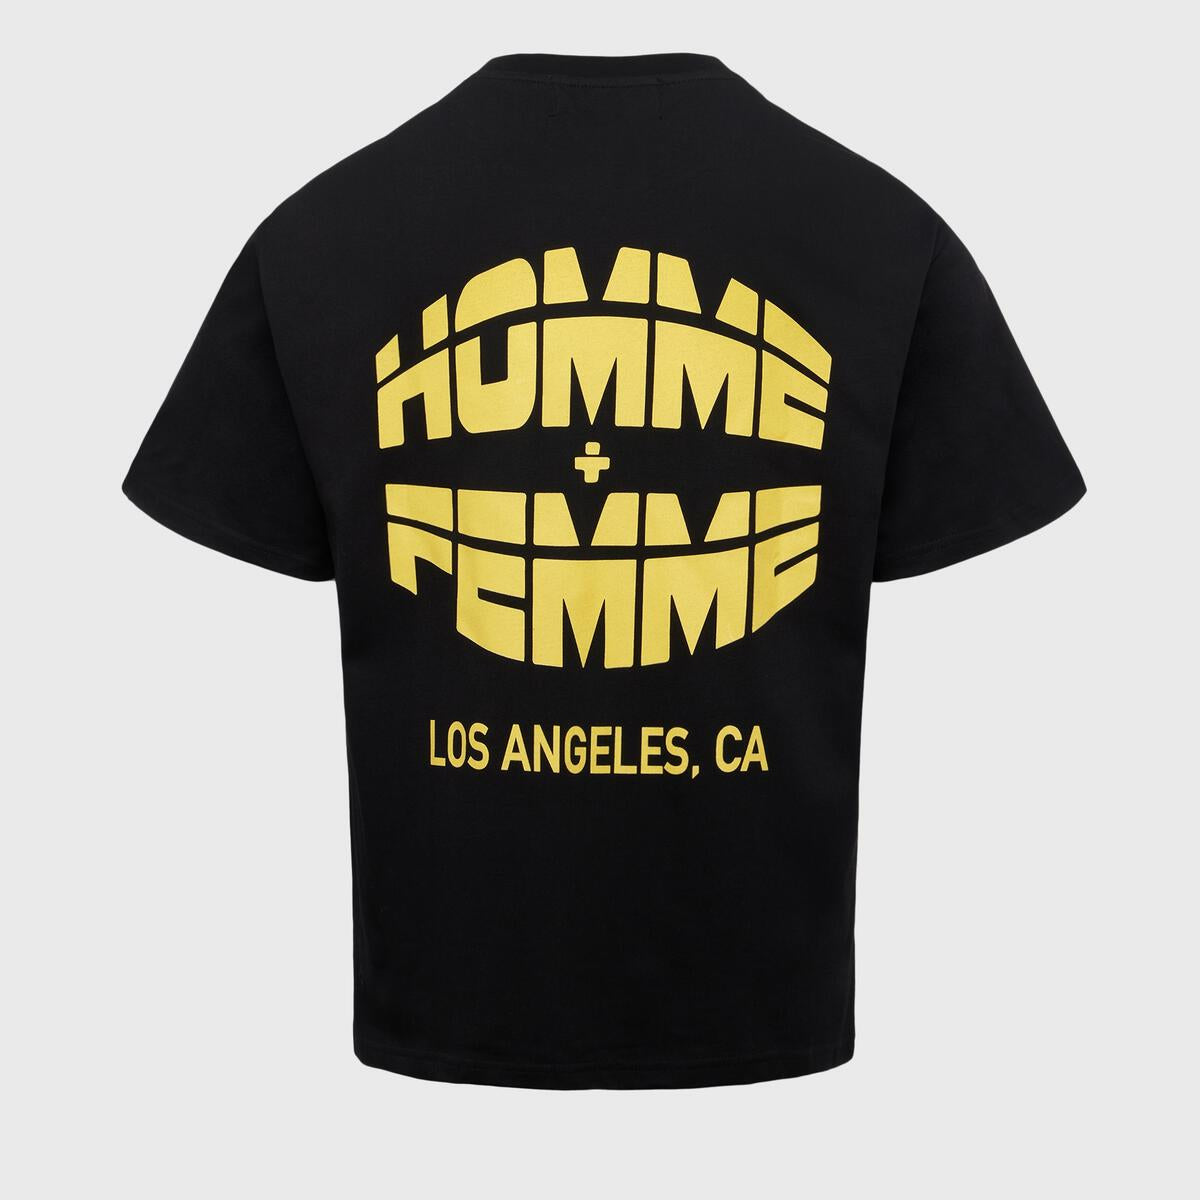 Homme + Femme Respect Tee - Black & Yellow